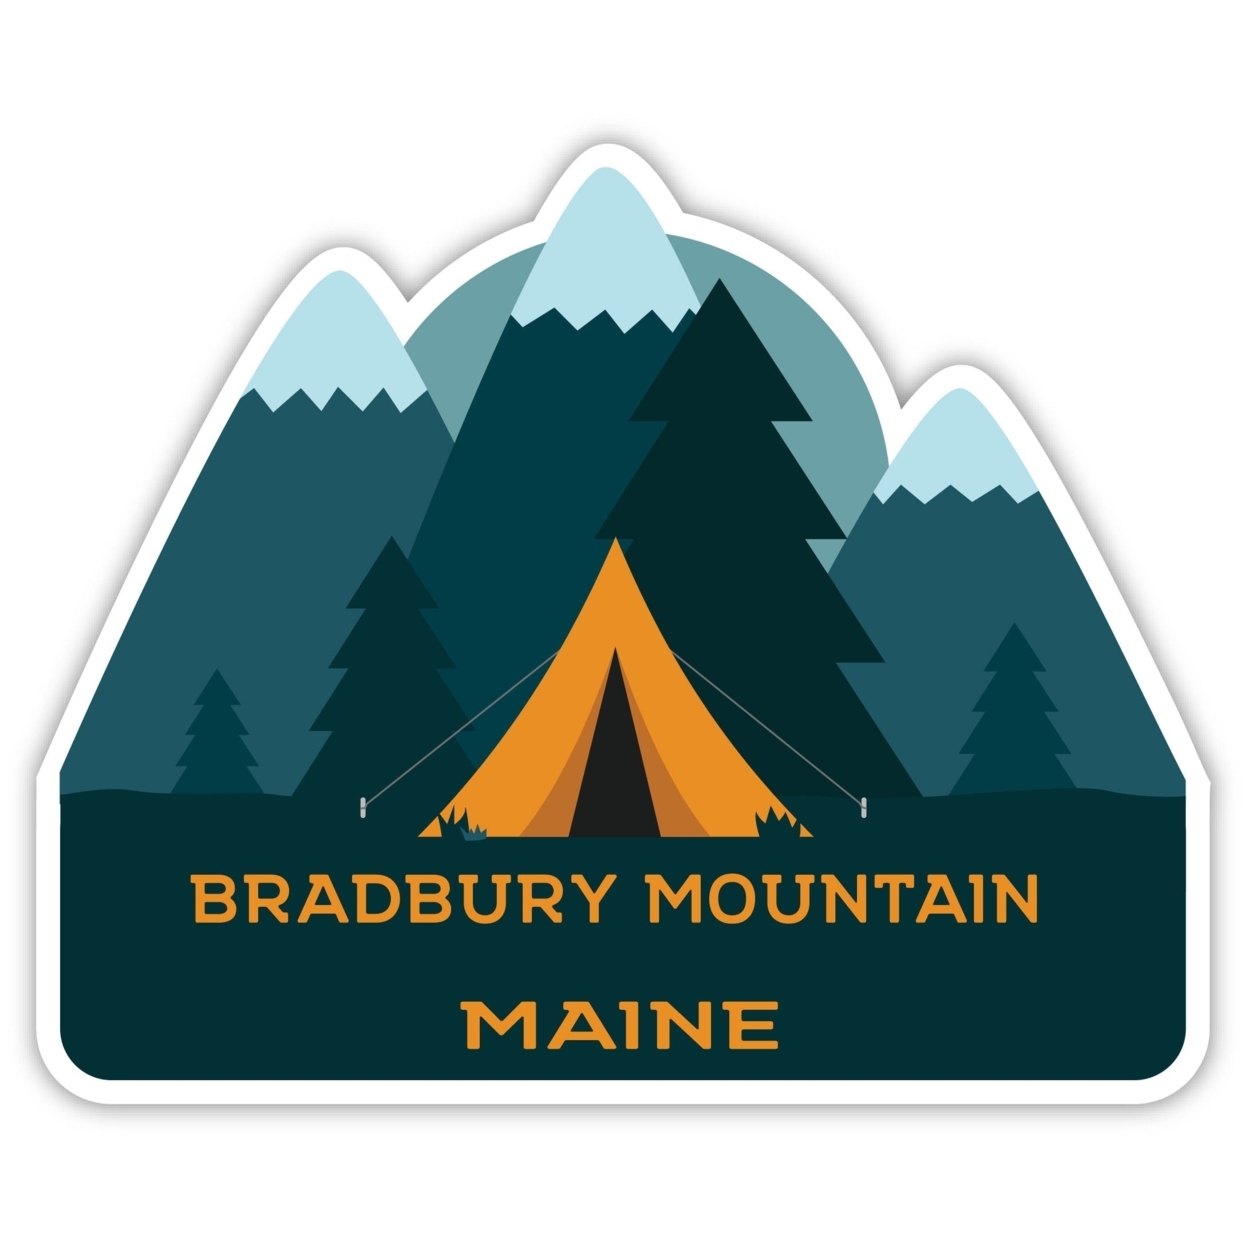 Bradbury Mountain Maine Souvenir Decorative Stickers (Choose Theme And Size) - 4-Pack, 12-Inch, Tent